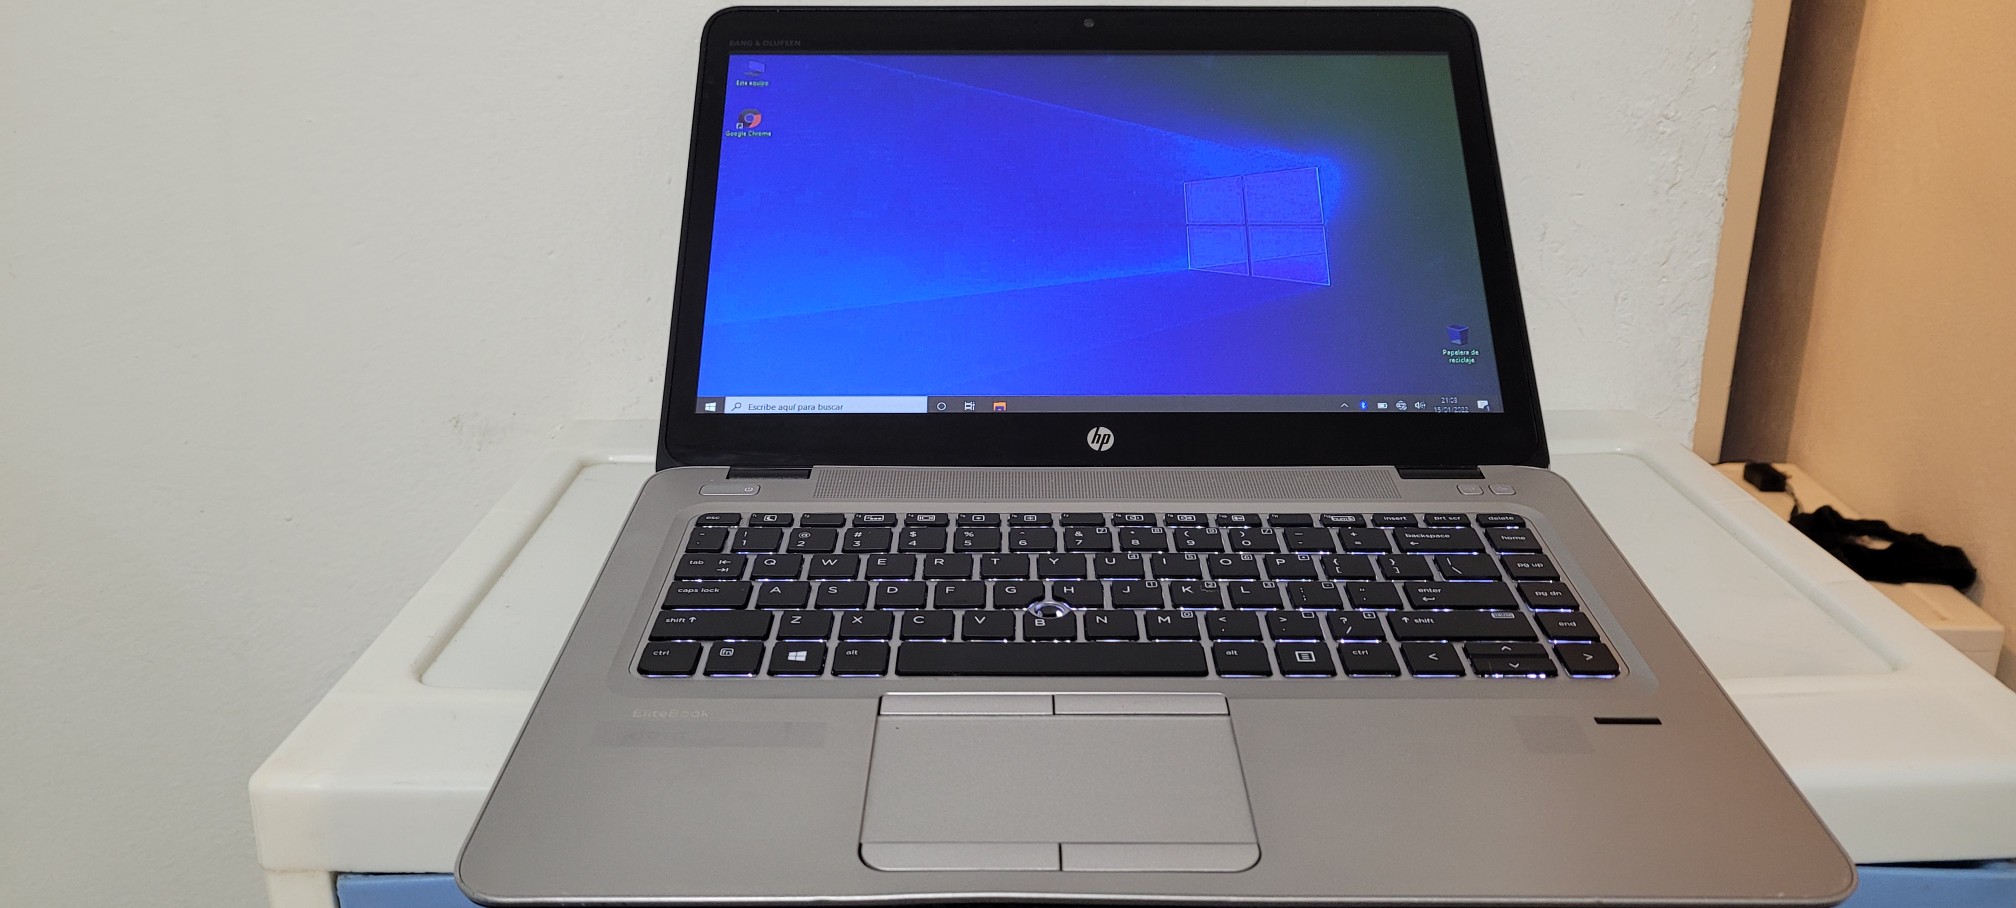 computadoras y laptops - Laptop hp EliteBooK 14 Pulg Core i5 7ma Gen Ram 8gb ddr4 SSD 500GB FULL